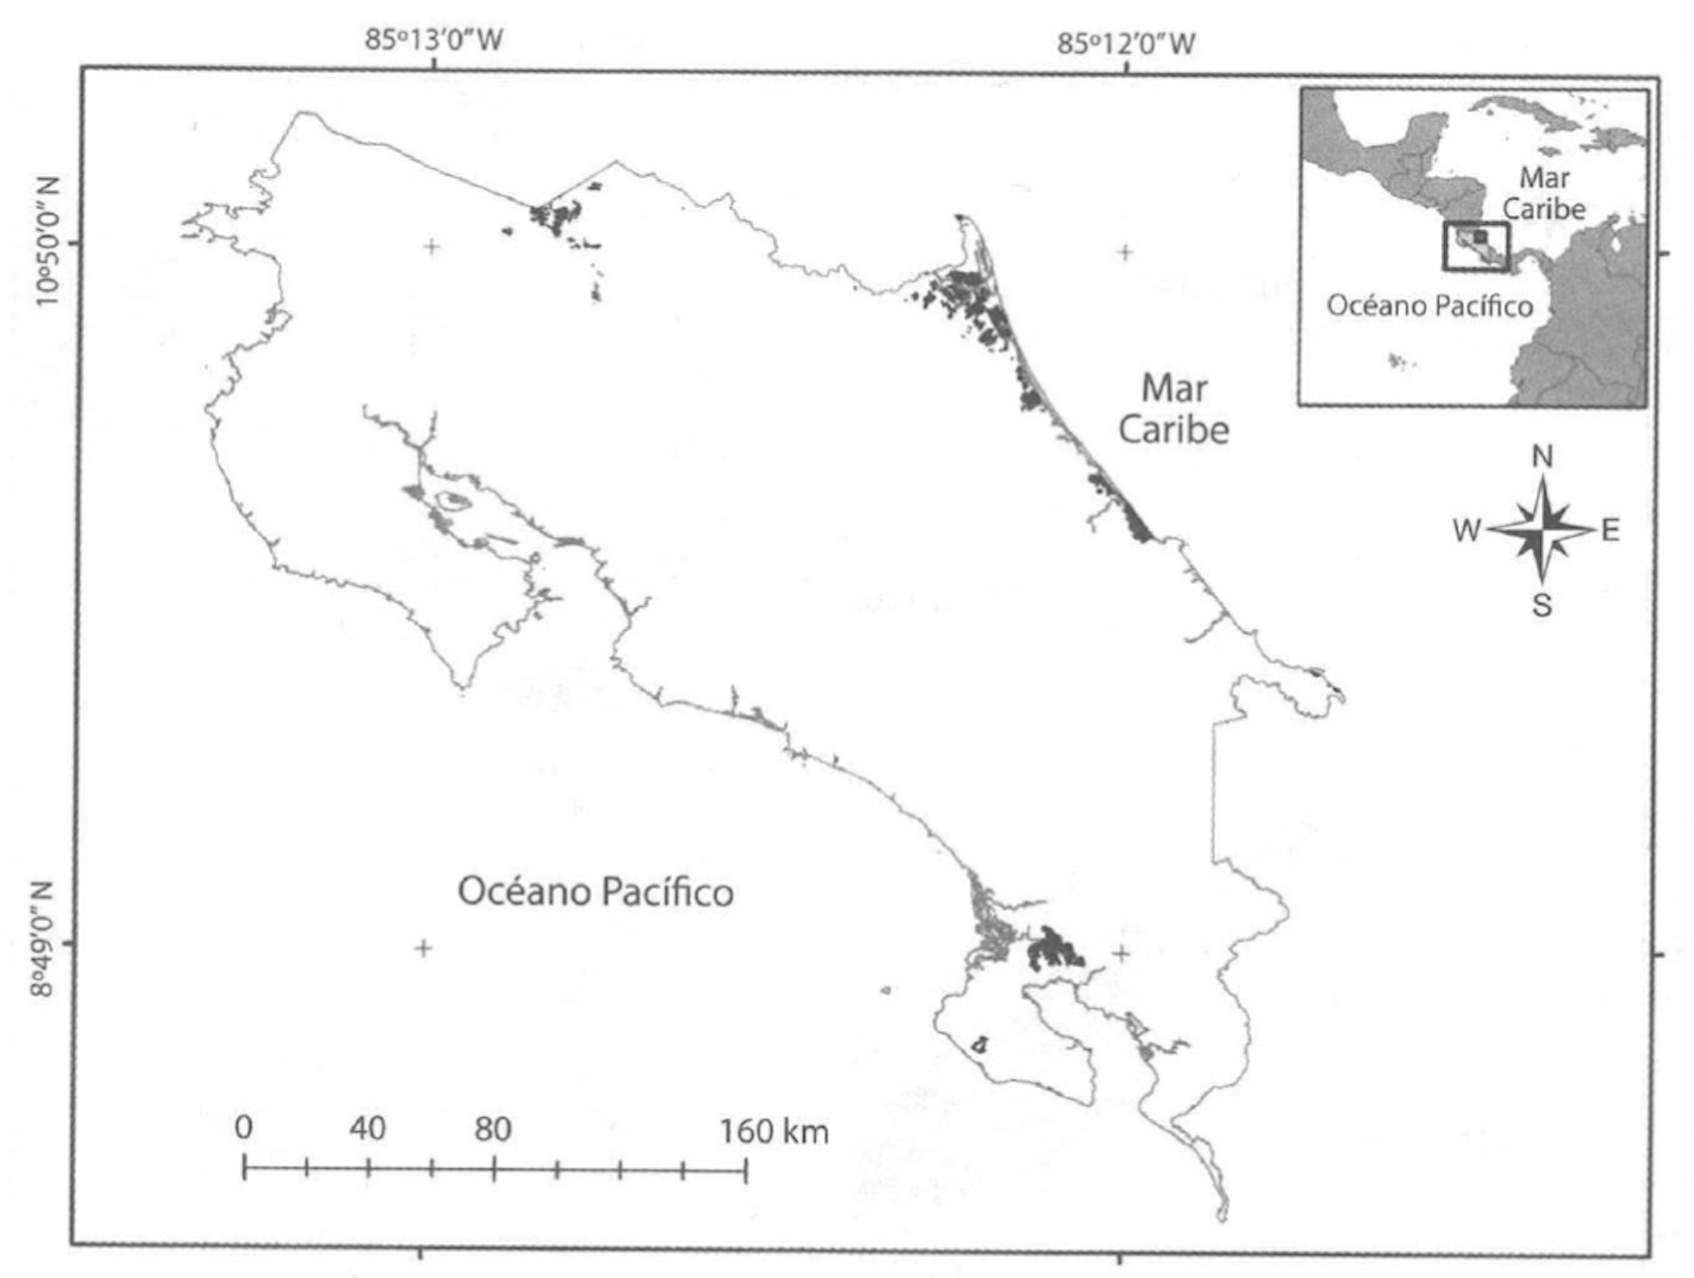 Raphia taedigera swamp (Yolillal) distributions for Costa Rica, Yolillal distribution was estimated by georeferenciating cartographic maps at 1:50000